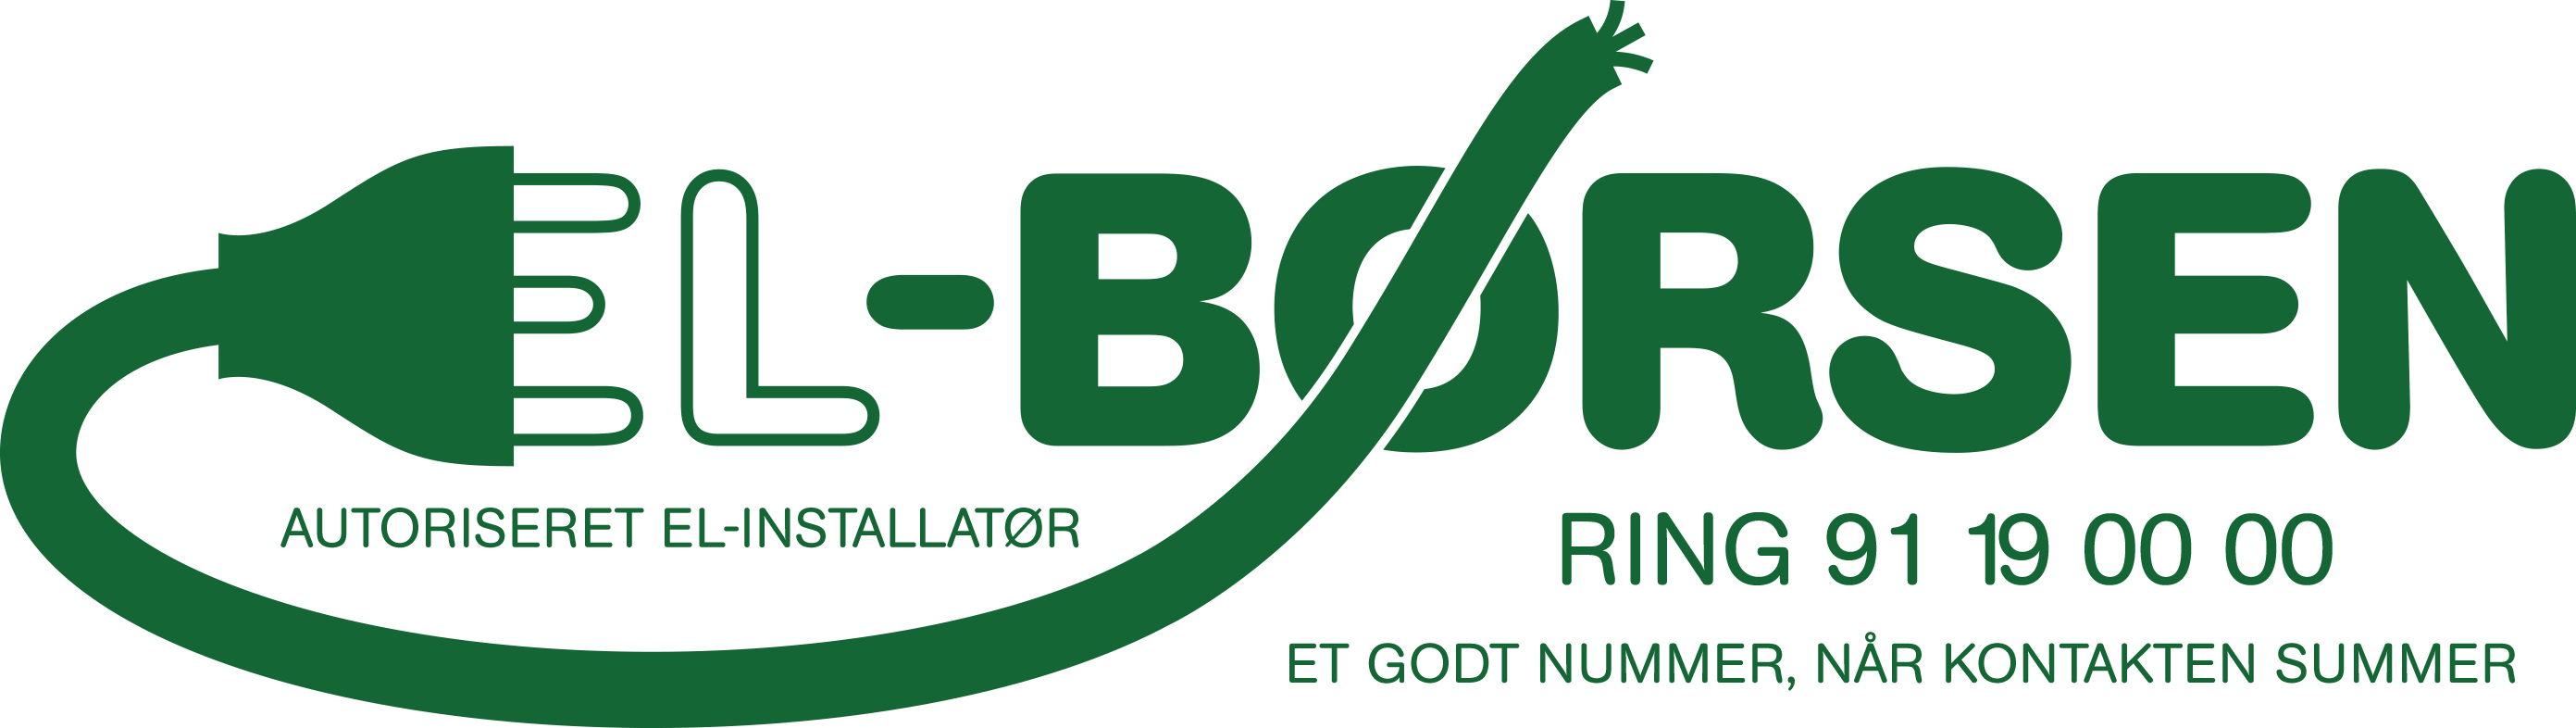 El-Brsens fine fine logo